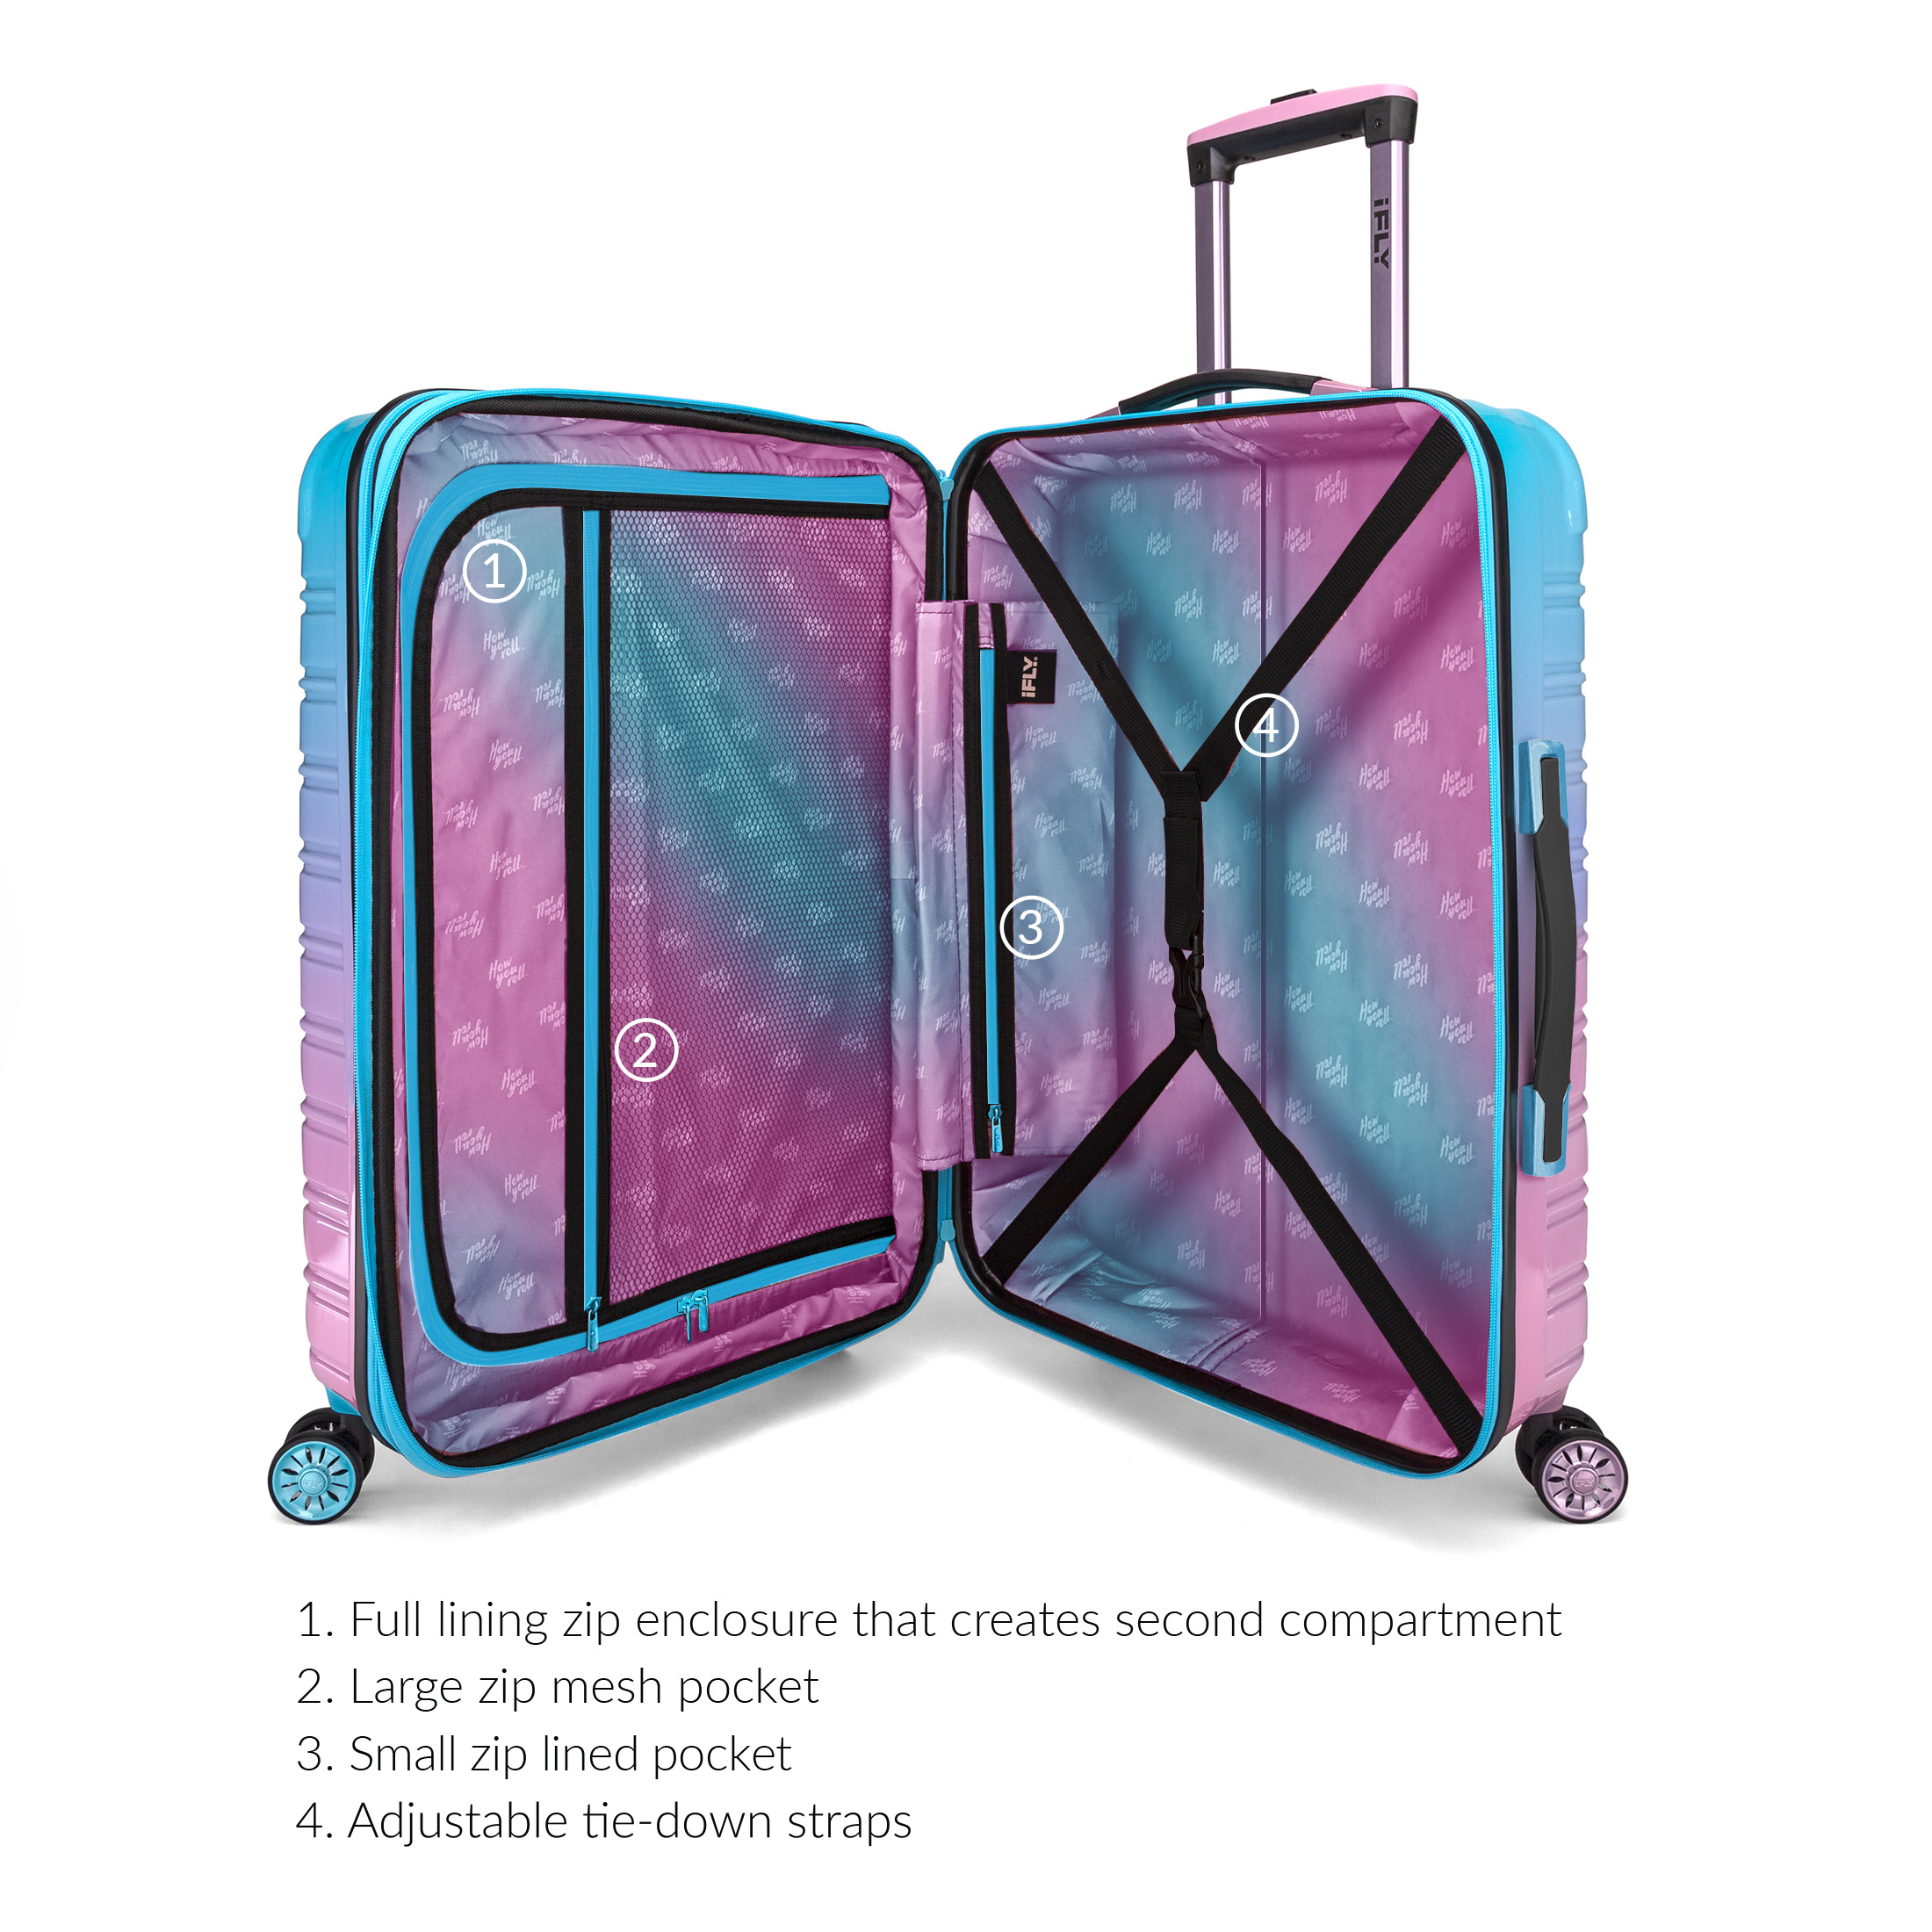 iFLY Hardside Luggage Fibertech 3 Piece Set, 20" Carry-on Luggage, 24" Checked Luggage and 28" Checked Luggage, Cotton Candy - image 5 of 12